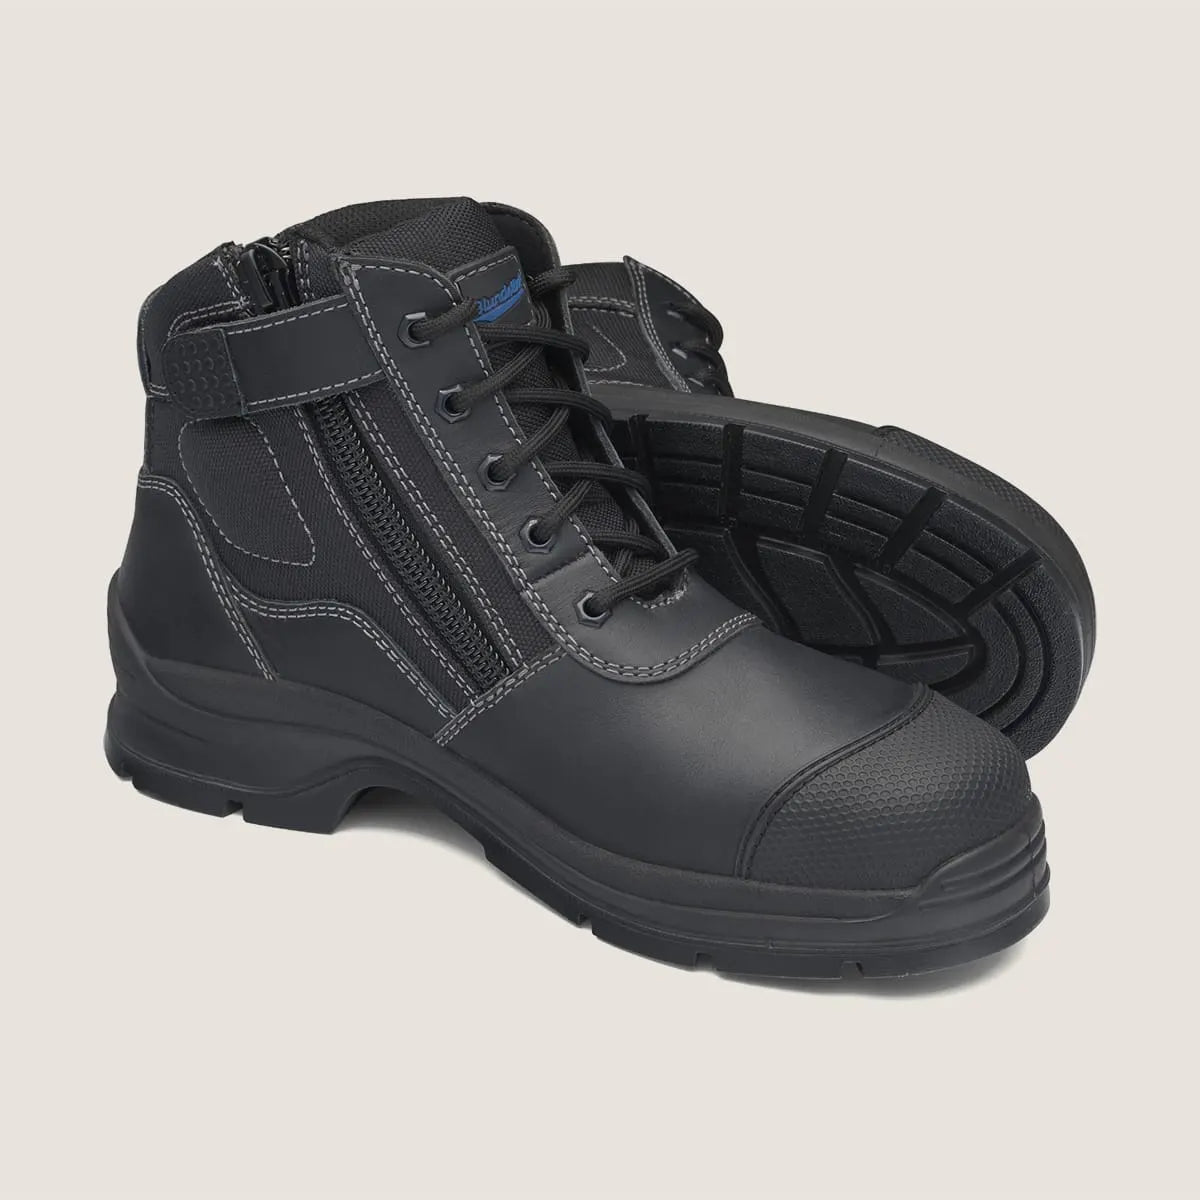 Blundstone 319 Unisex Zip Up Safety Boots-Black